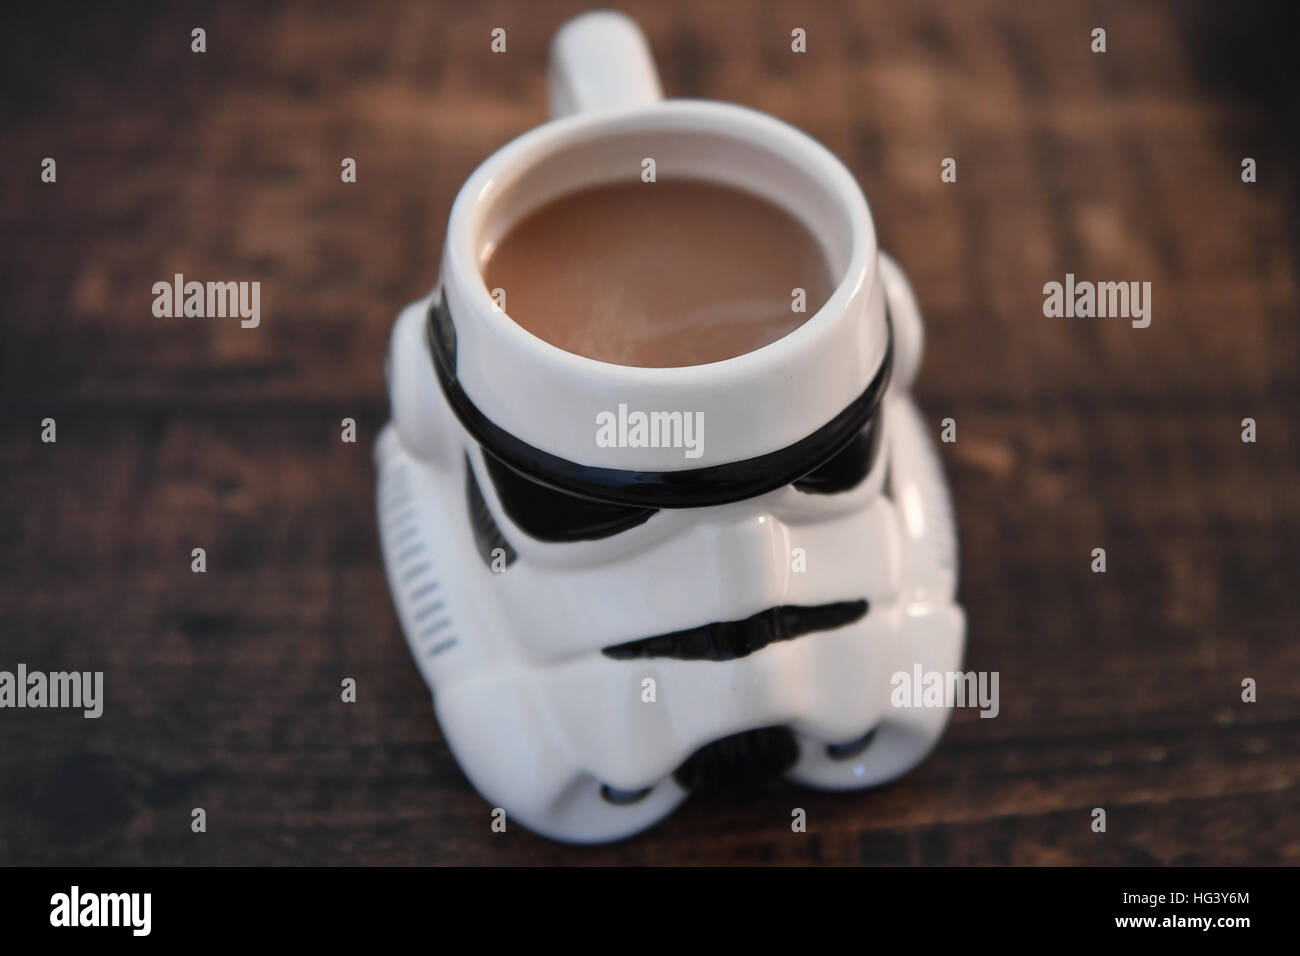 A Storm Trooper helmet mug filled with tea on a dark wood table, star wars merchandise. Stock Photo